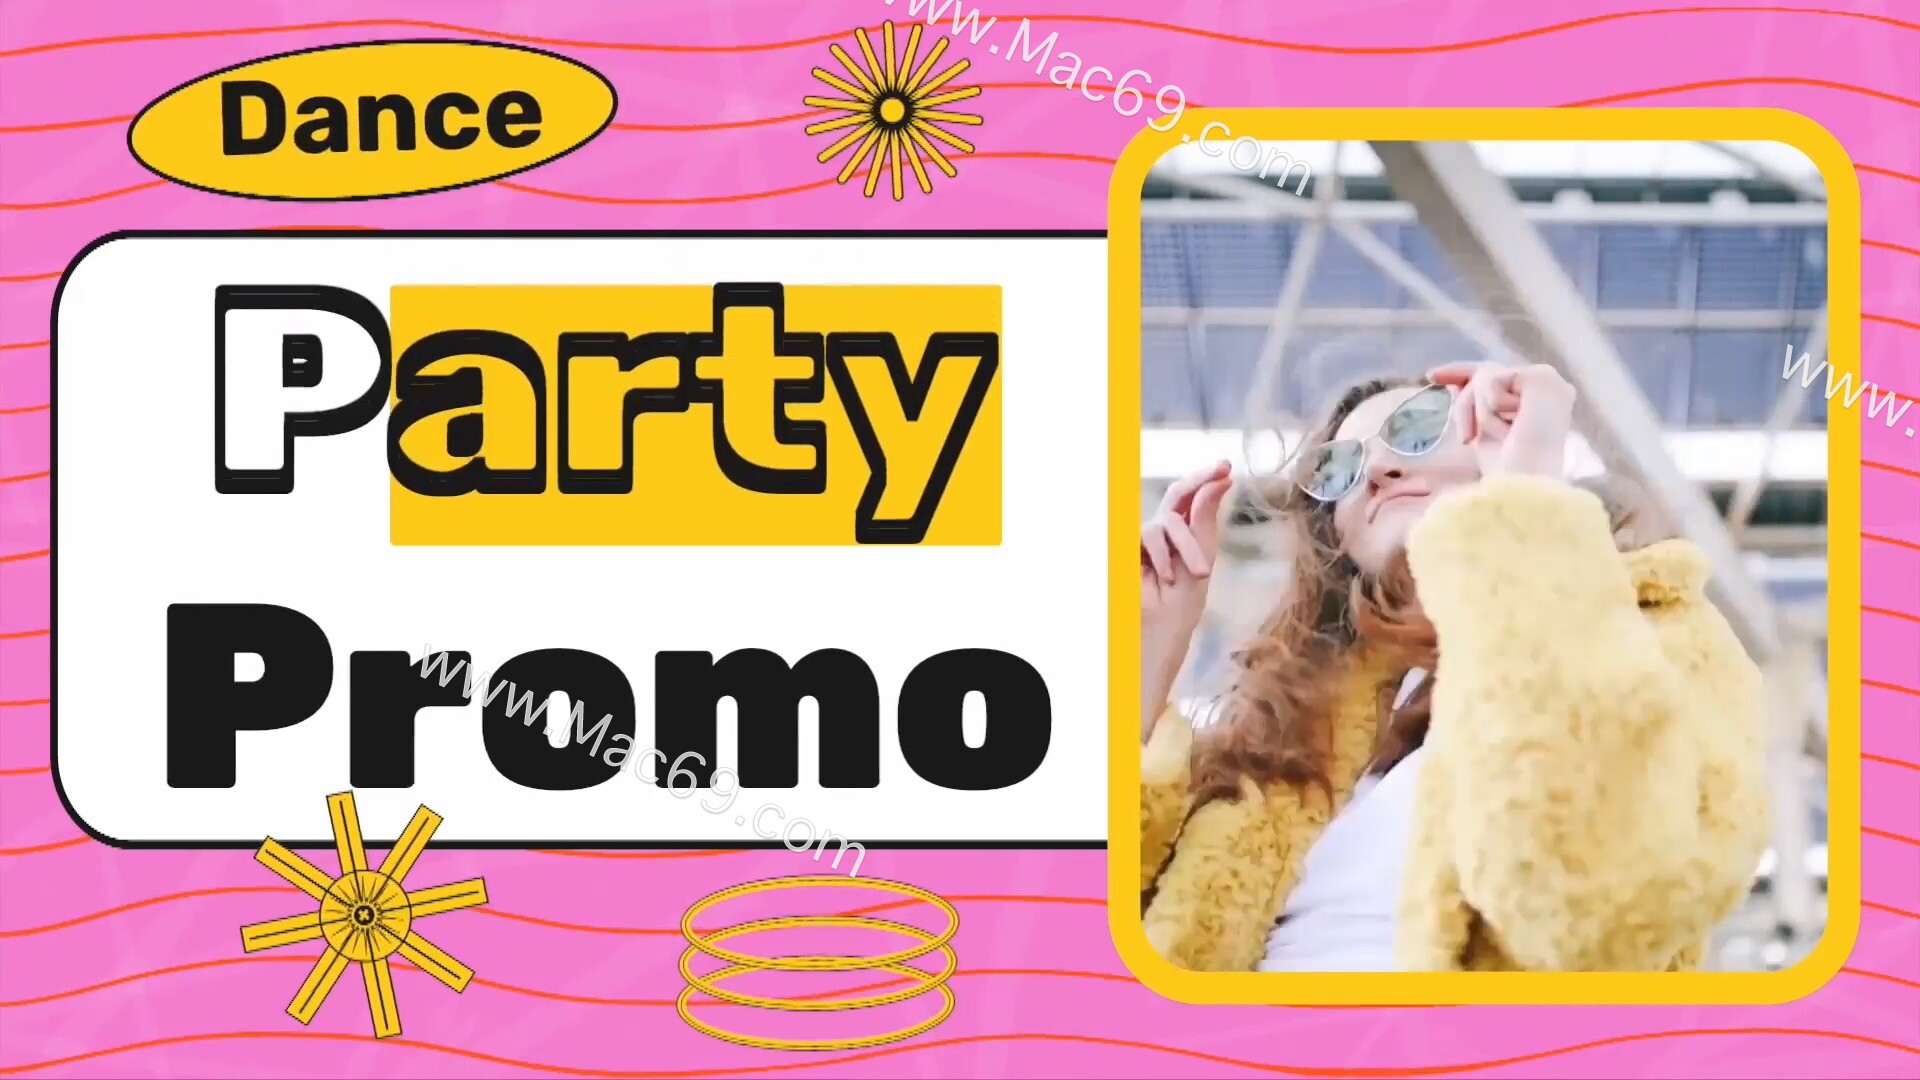 fcpx插件Cool Party Promo(炫酷派对动画模板)